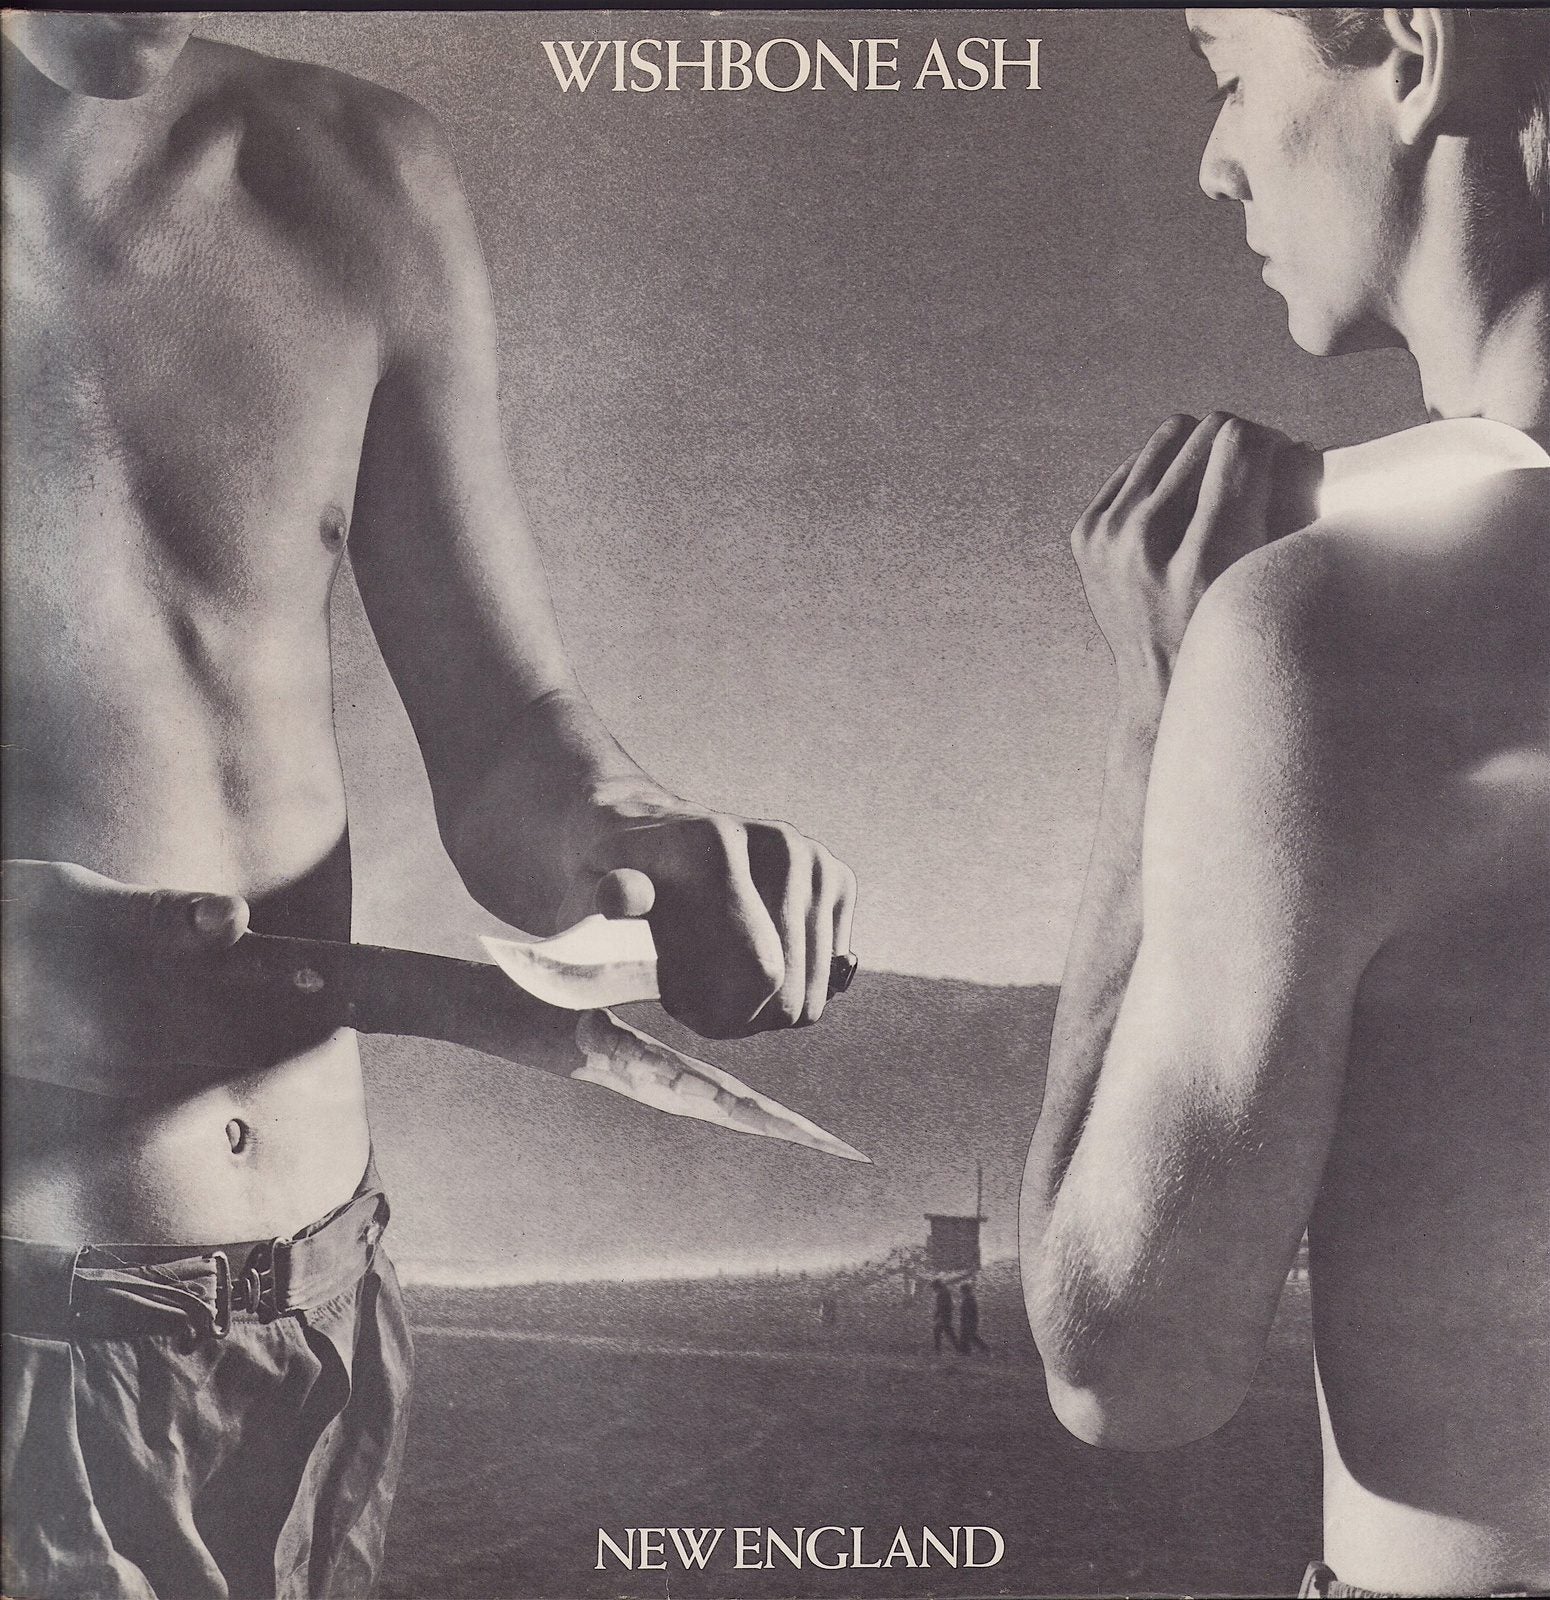 Wishbone Ash - New England (Vinyl LP)